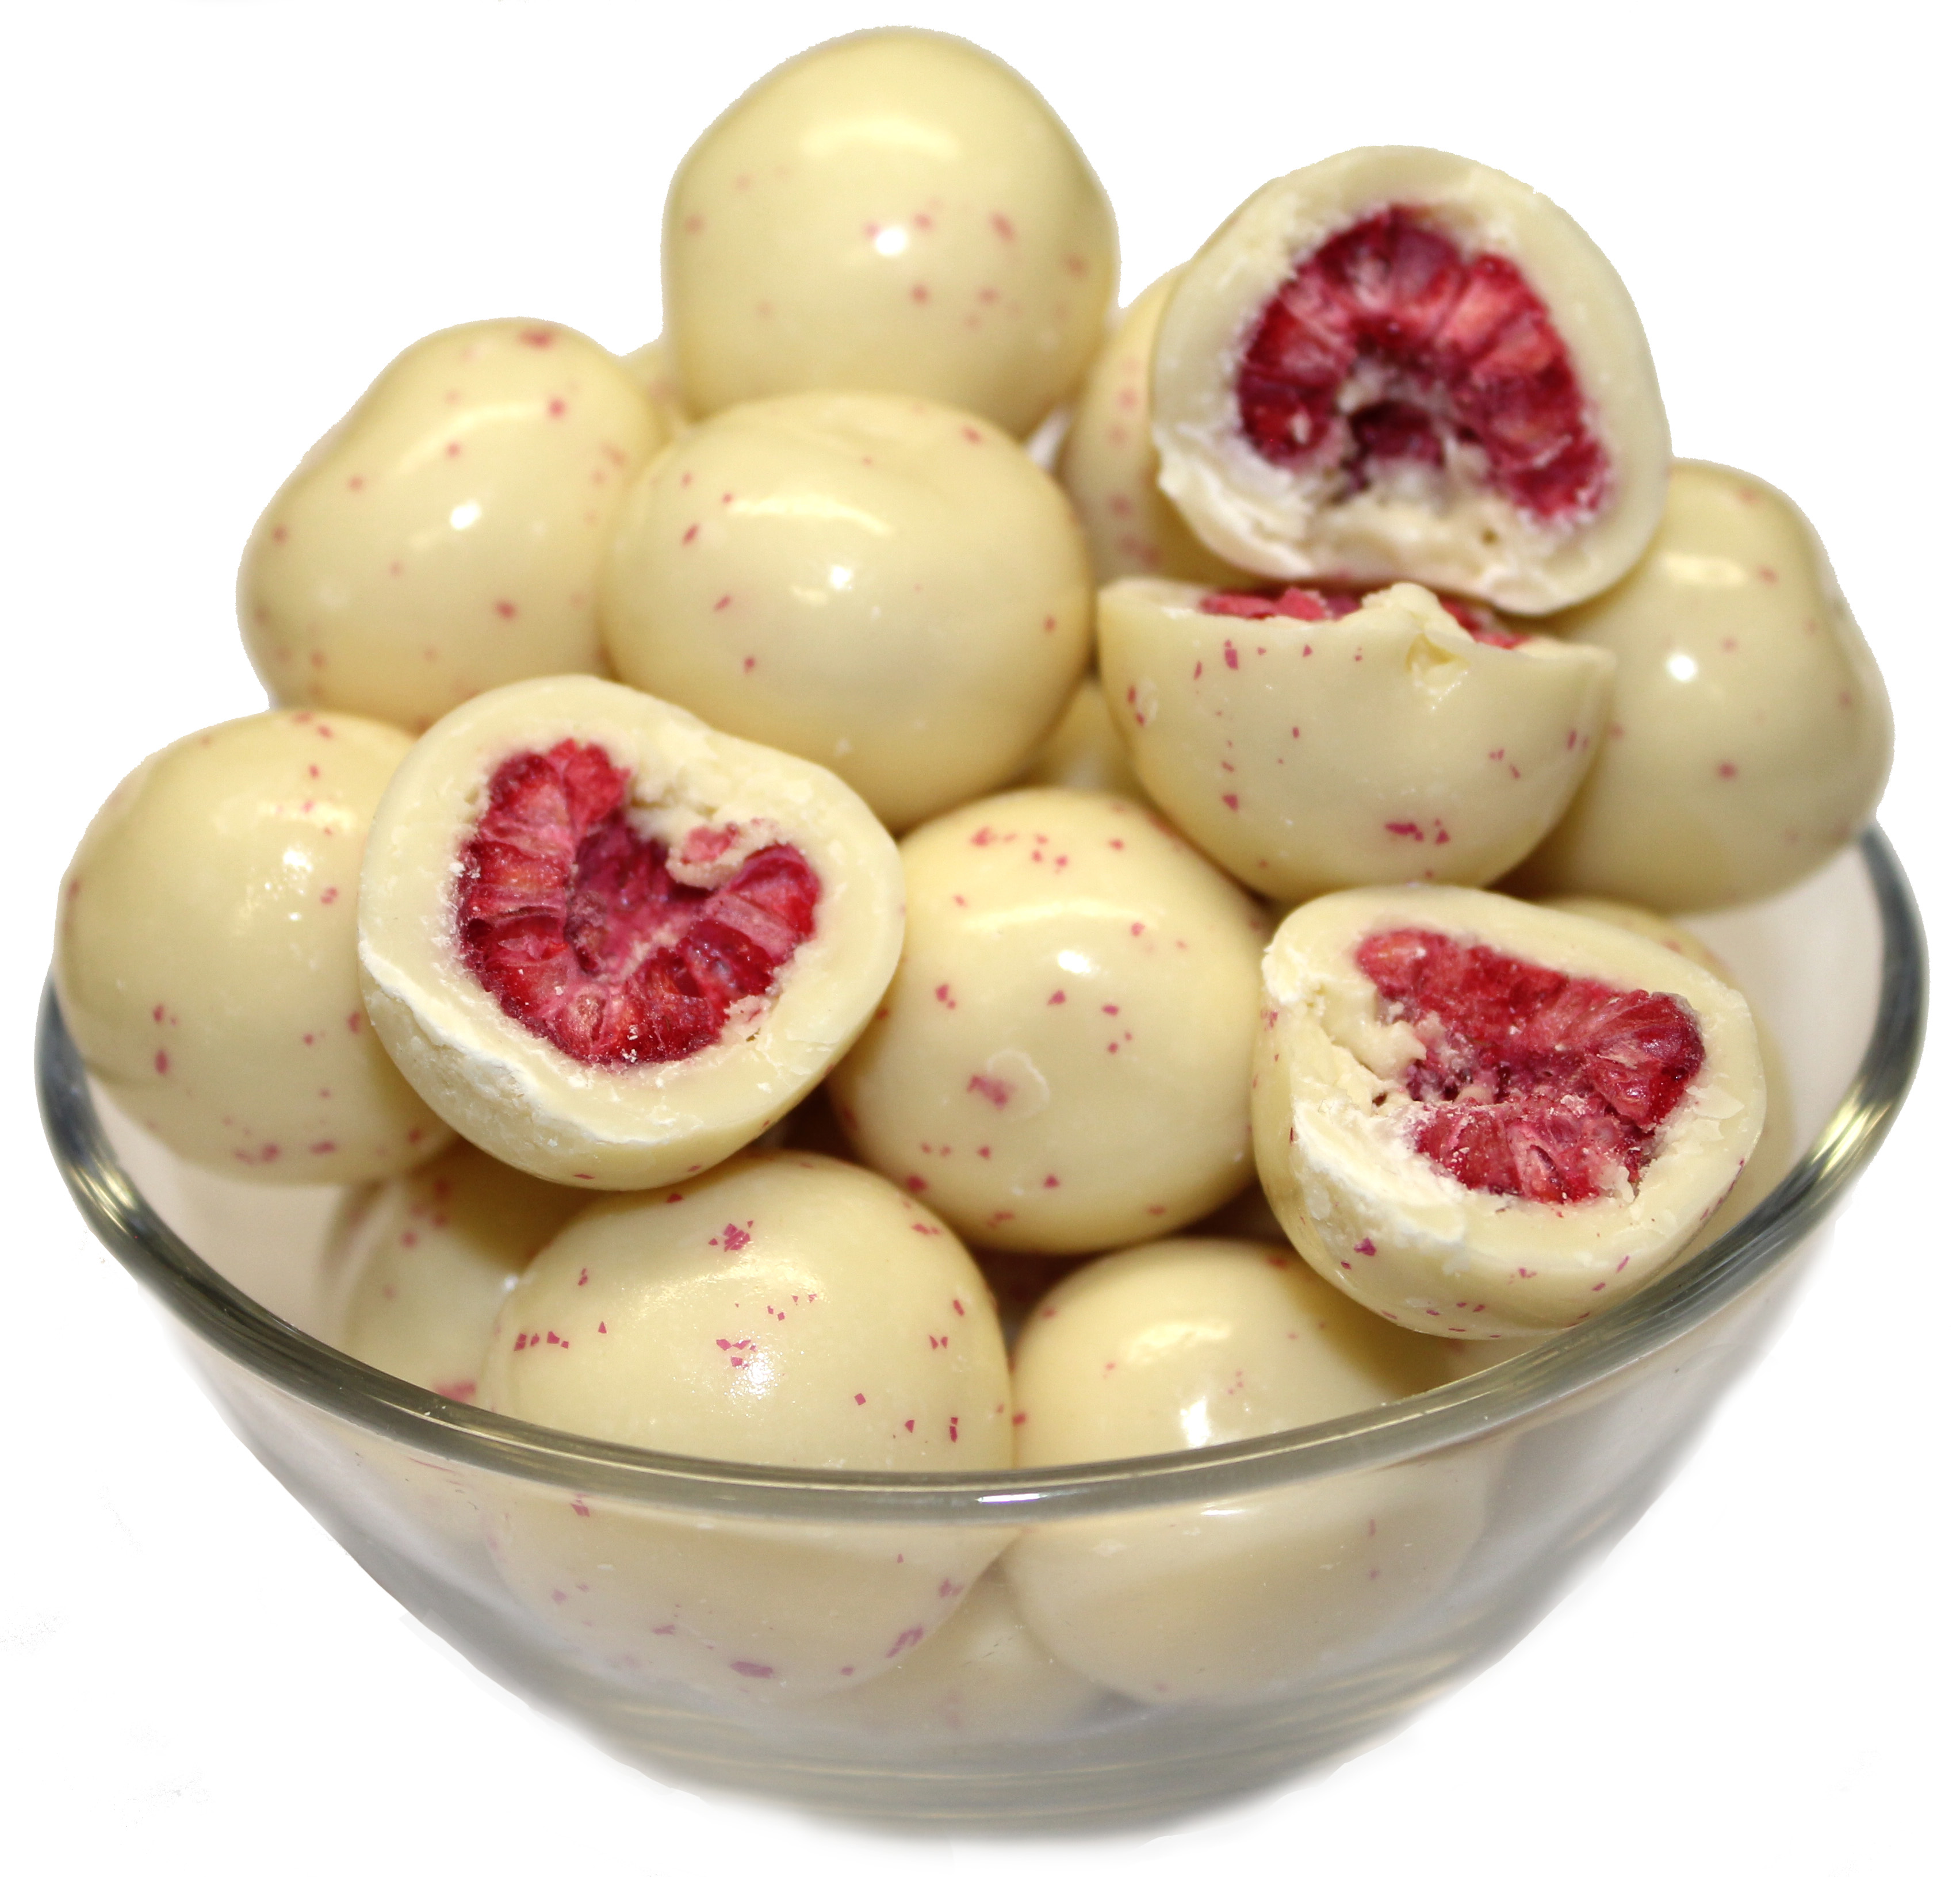 Raspberries Coated in Yoghurt